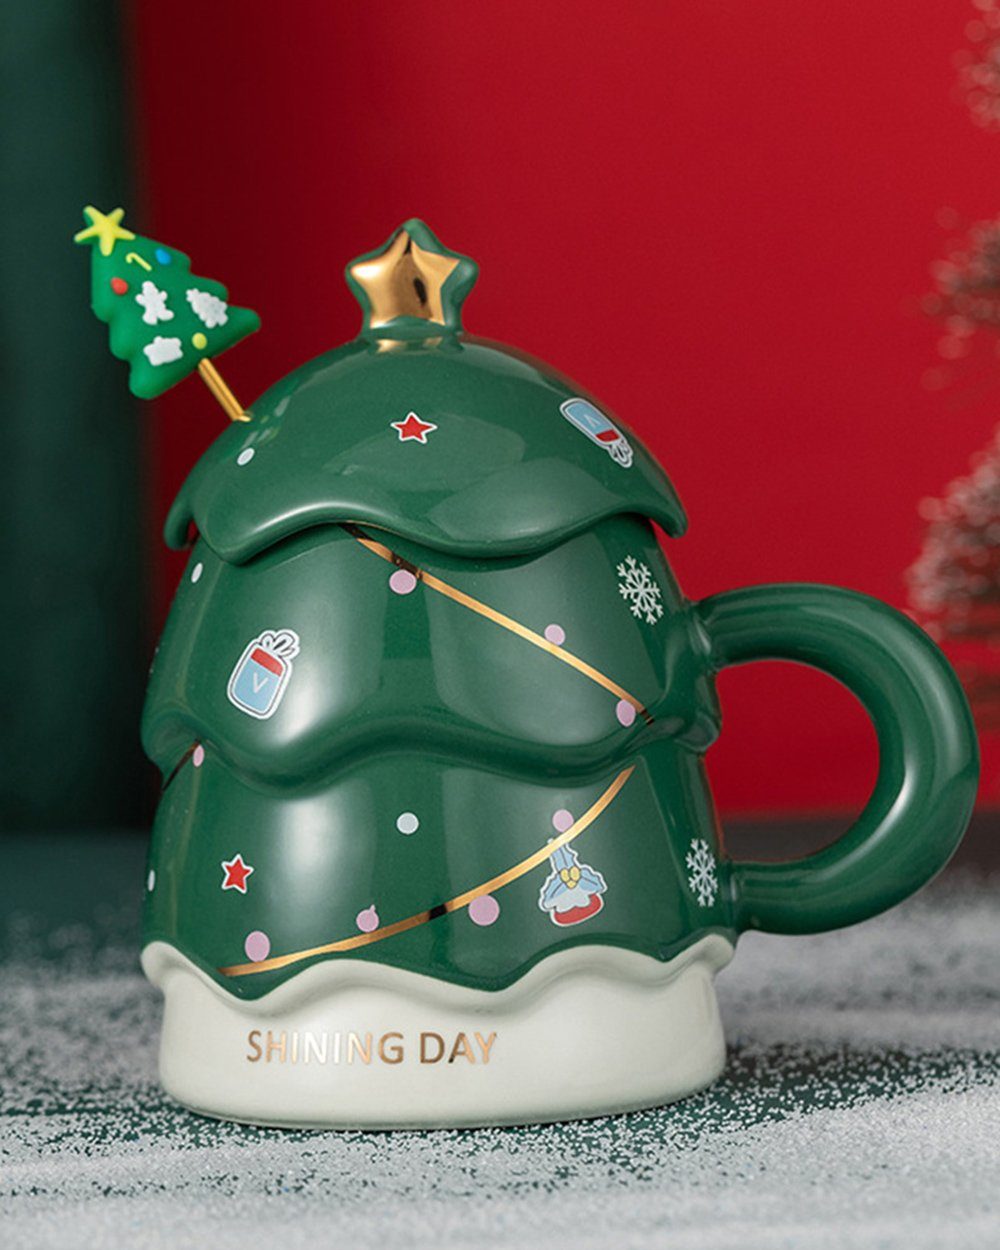 Dekorative Becher Weihnachtsbecher, Becher, Kaffeebecher, Weihnachtsgeschenke, Weihnachtsbecher mit Löffel grün